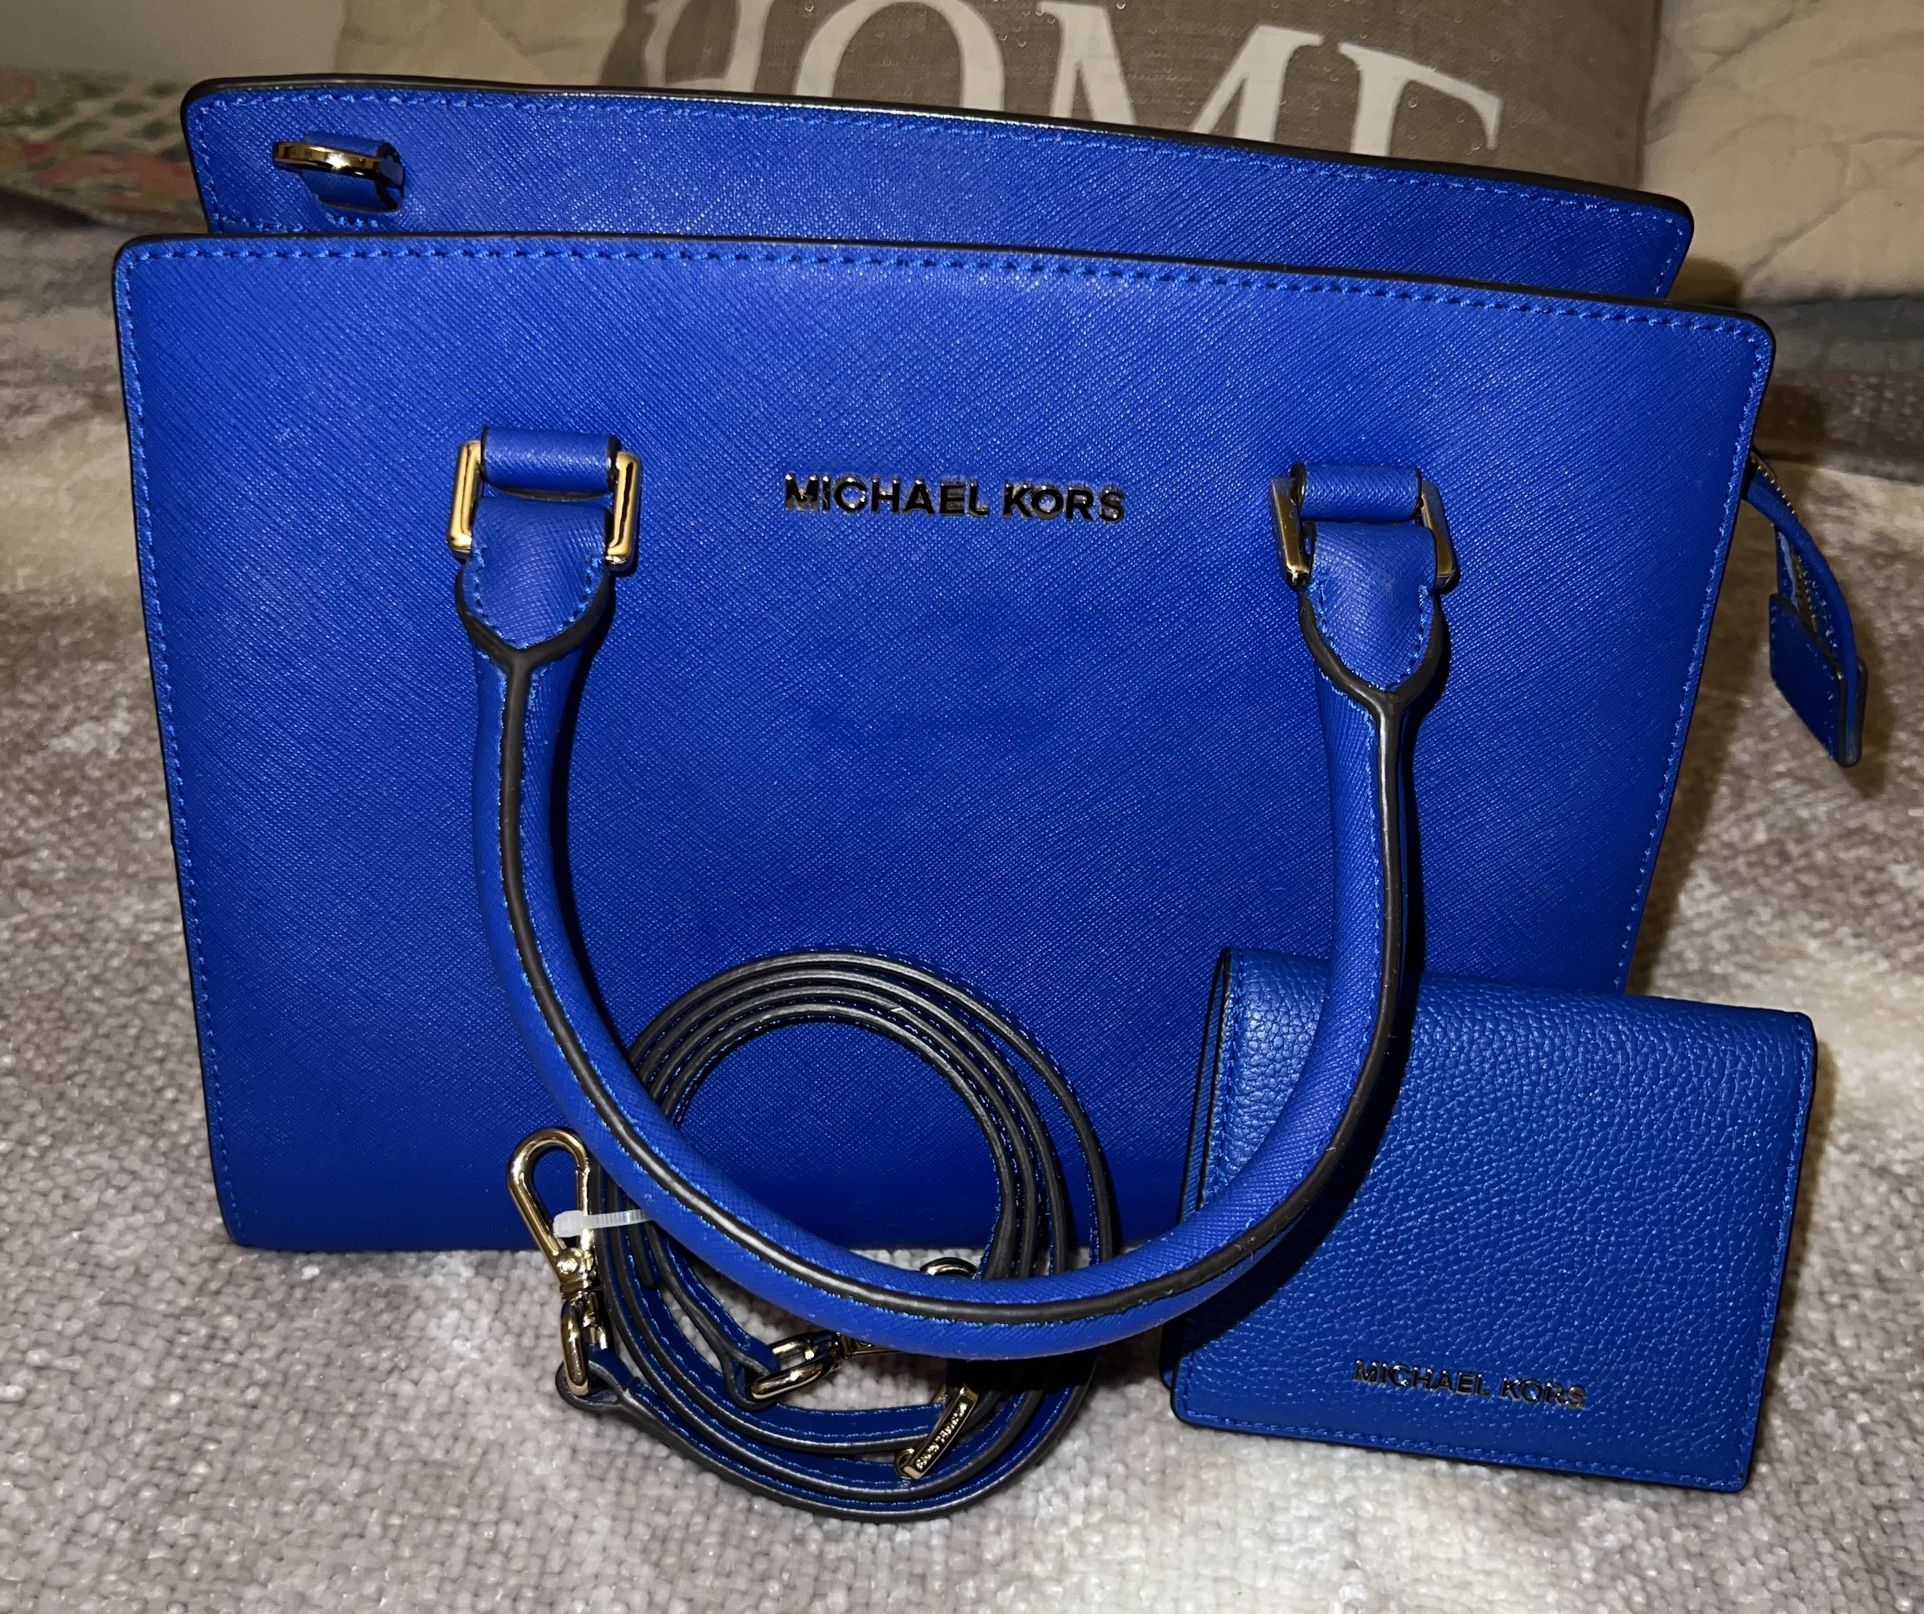 Michael Kors Electric Blue Crossbody Medium Bag for Sale in Carson, CA -  OfferUp